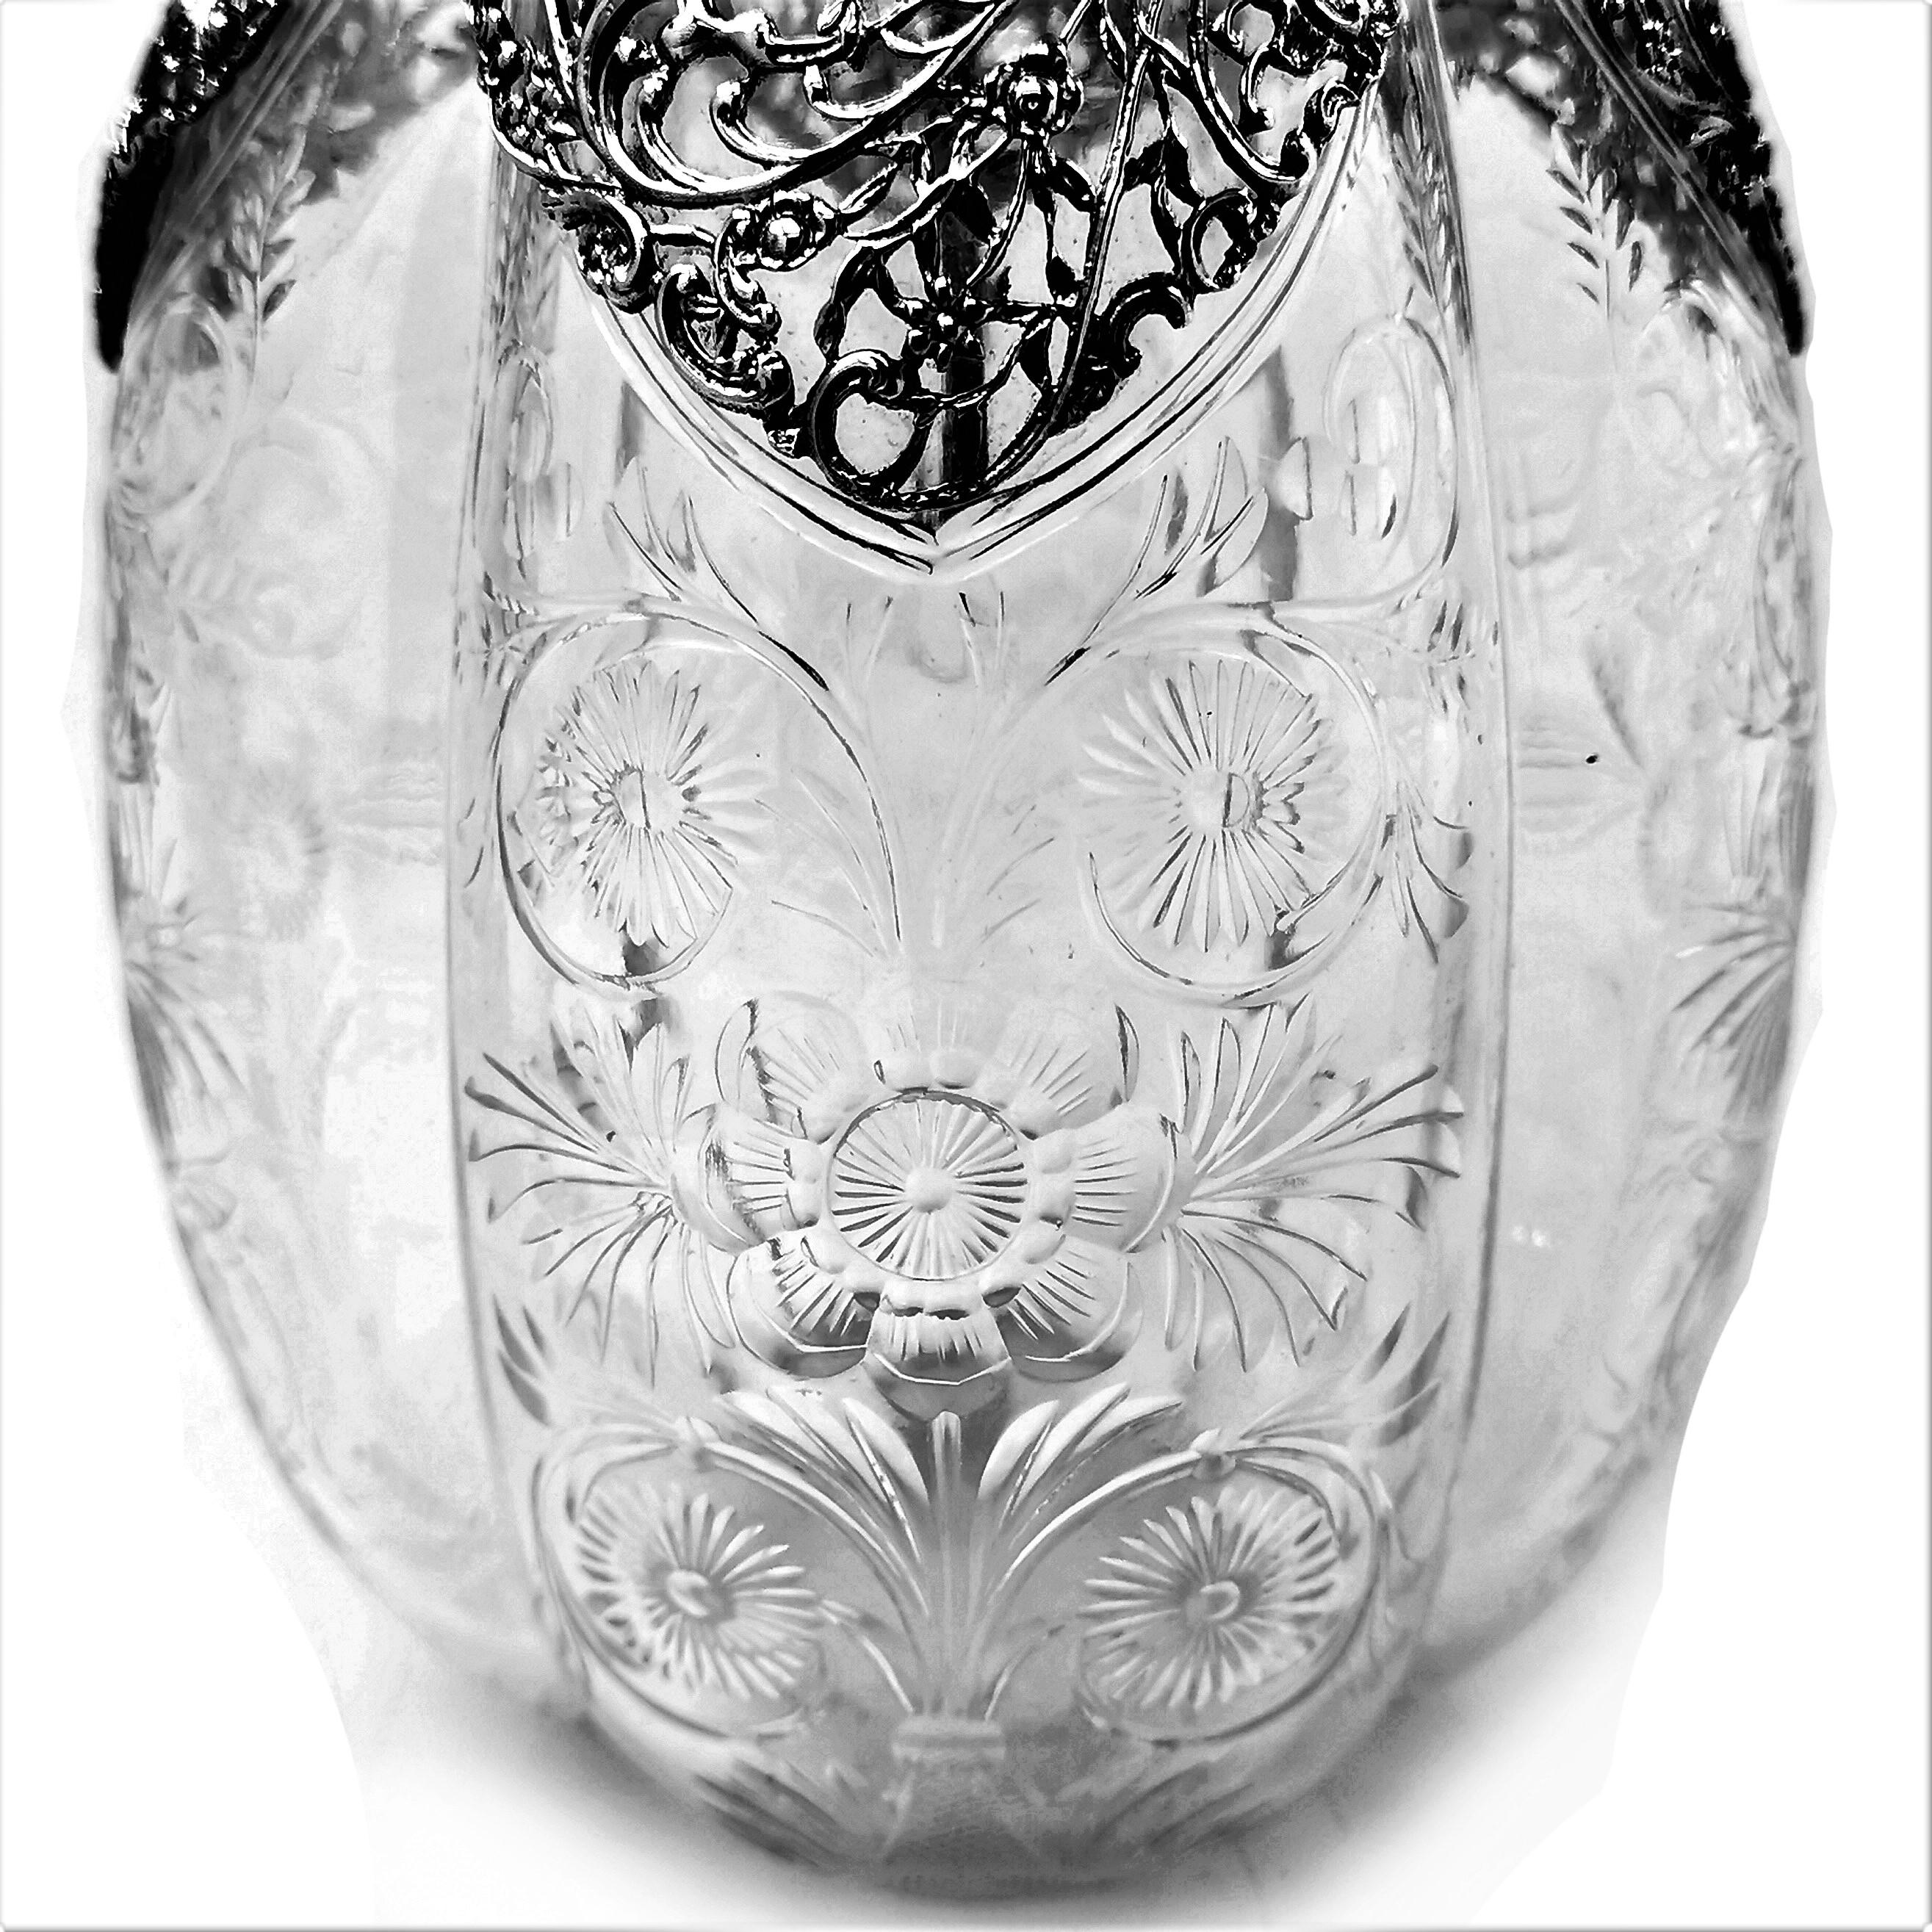 Antique Edwardian Sterling Silver & Cut Glass Claret Jug or Wine Decanter 1904 4